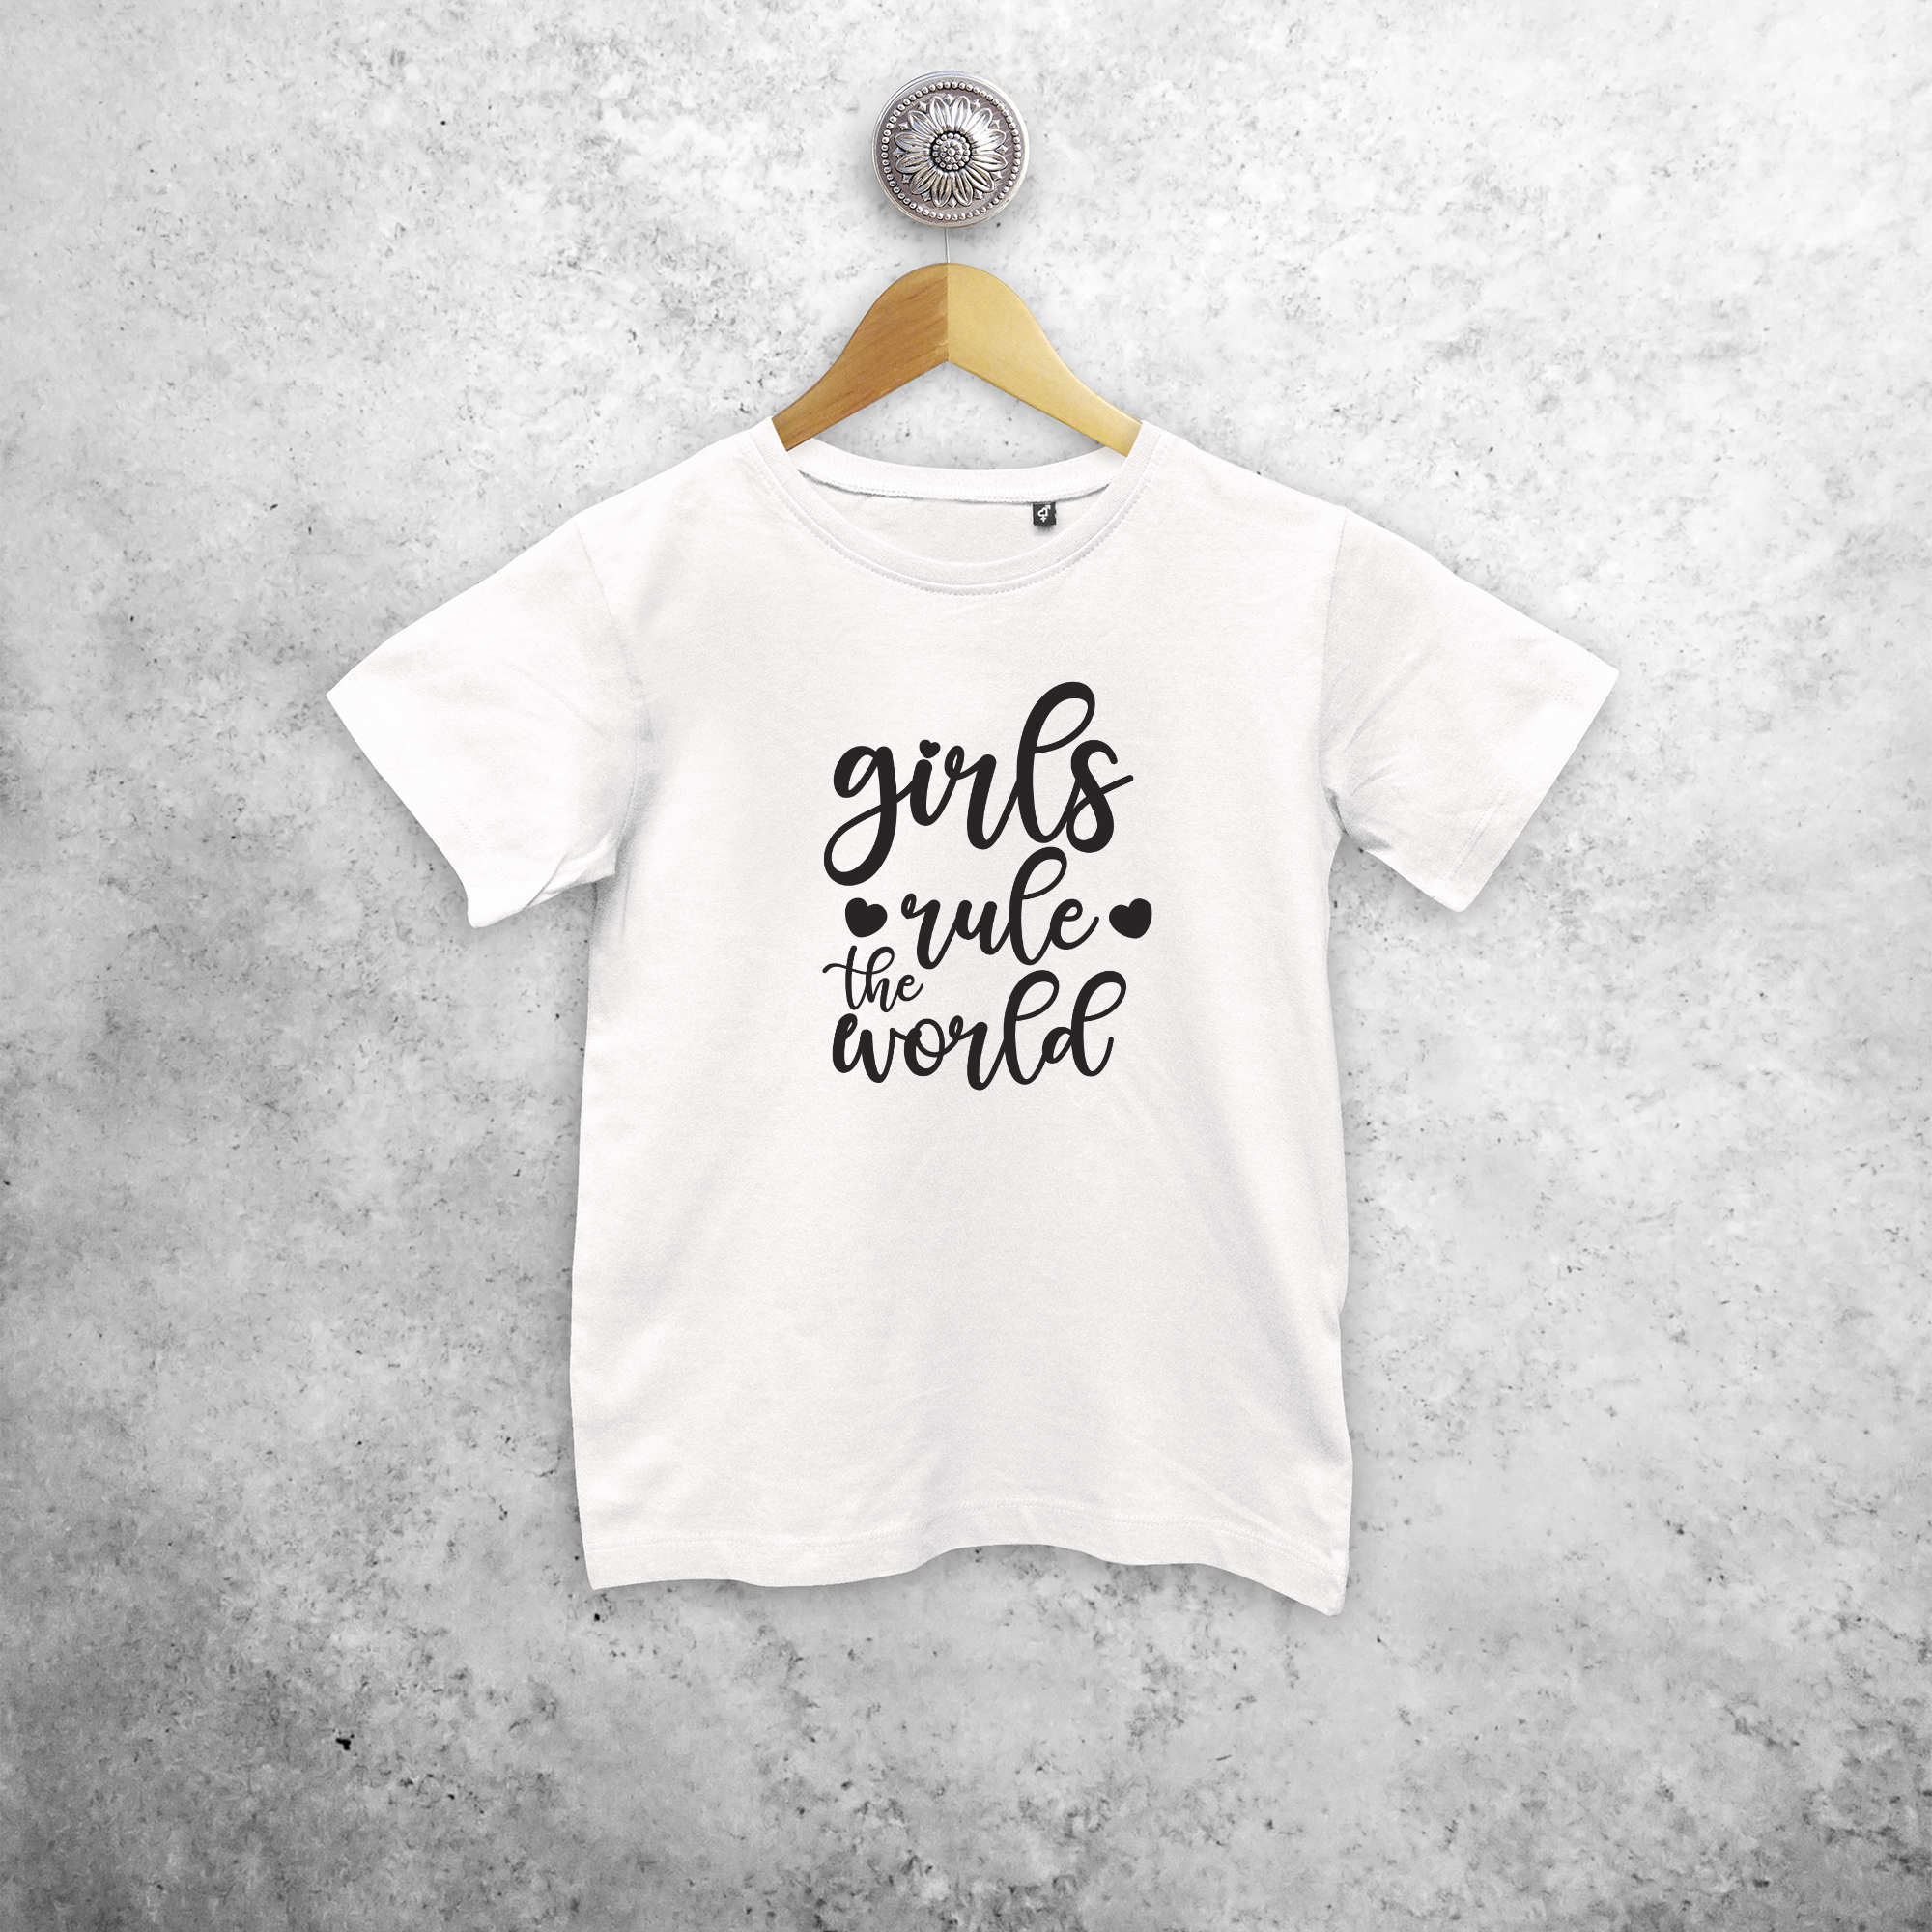 'Girls rule the world' kids shortsleeve shirt